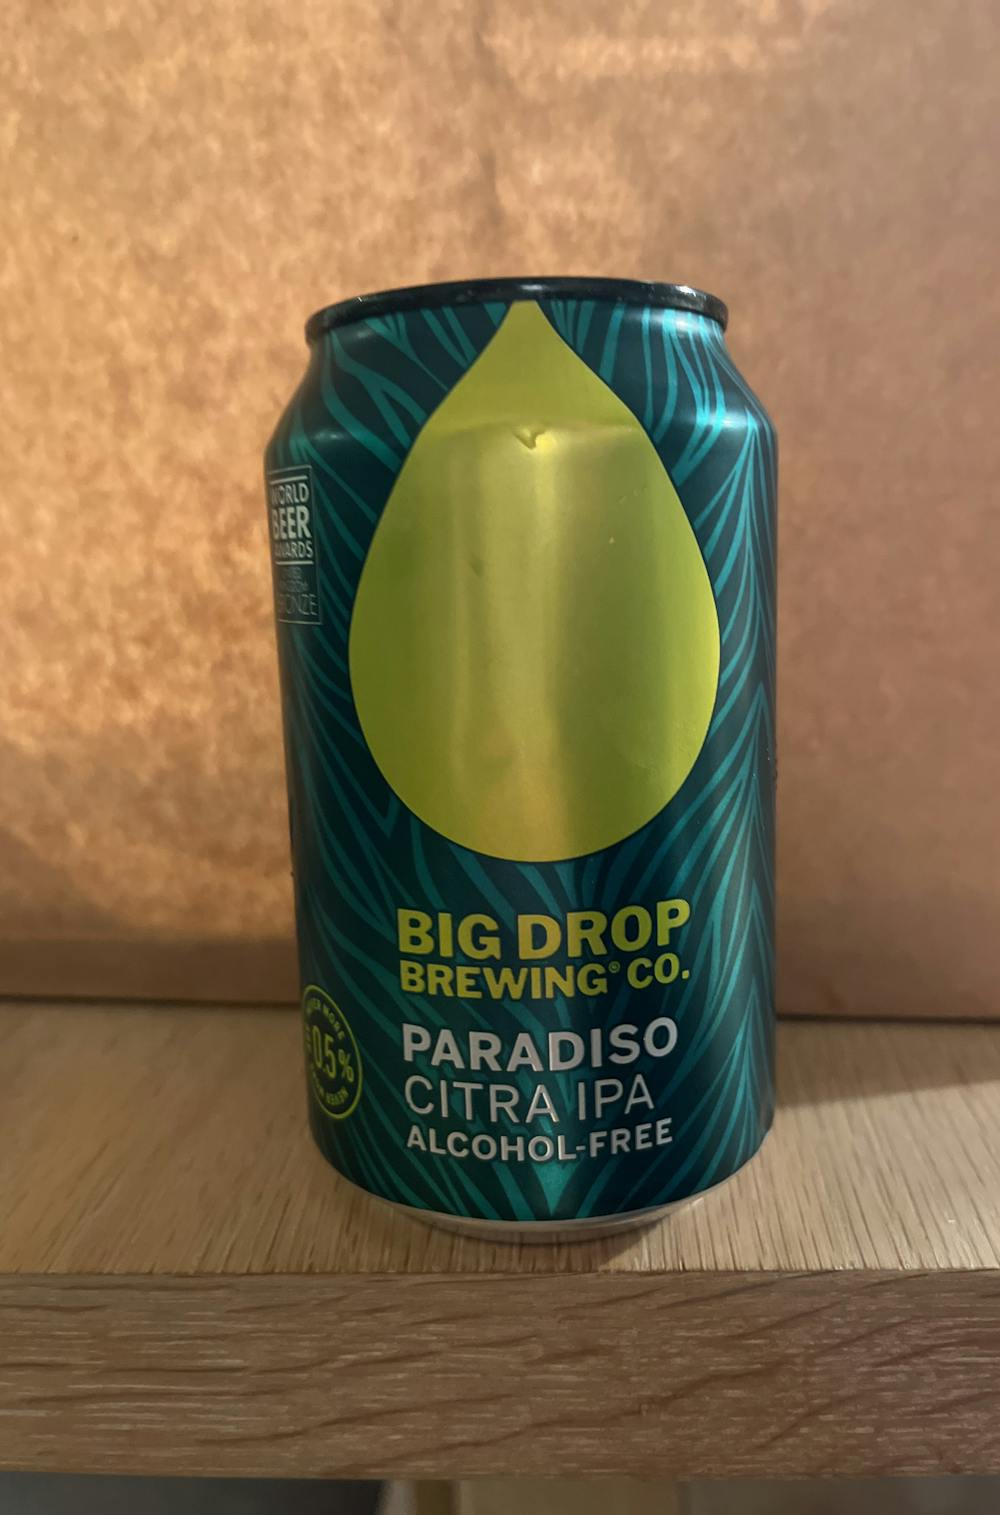 Paradiso citra IPA, Big drop brewing